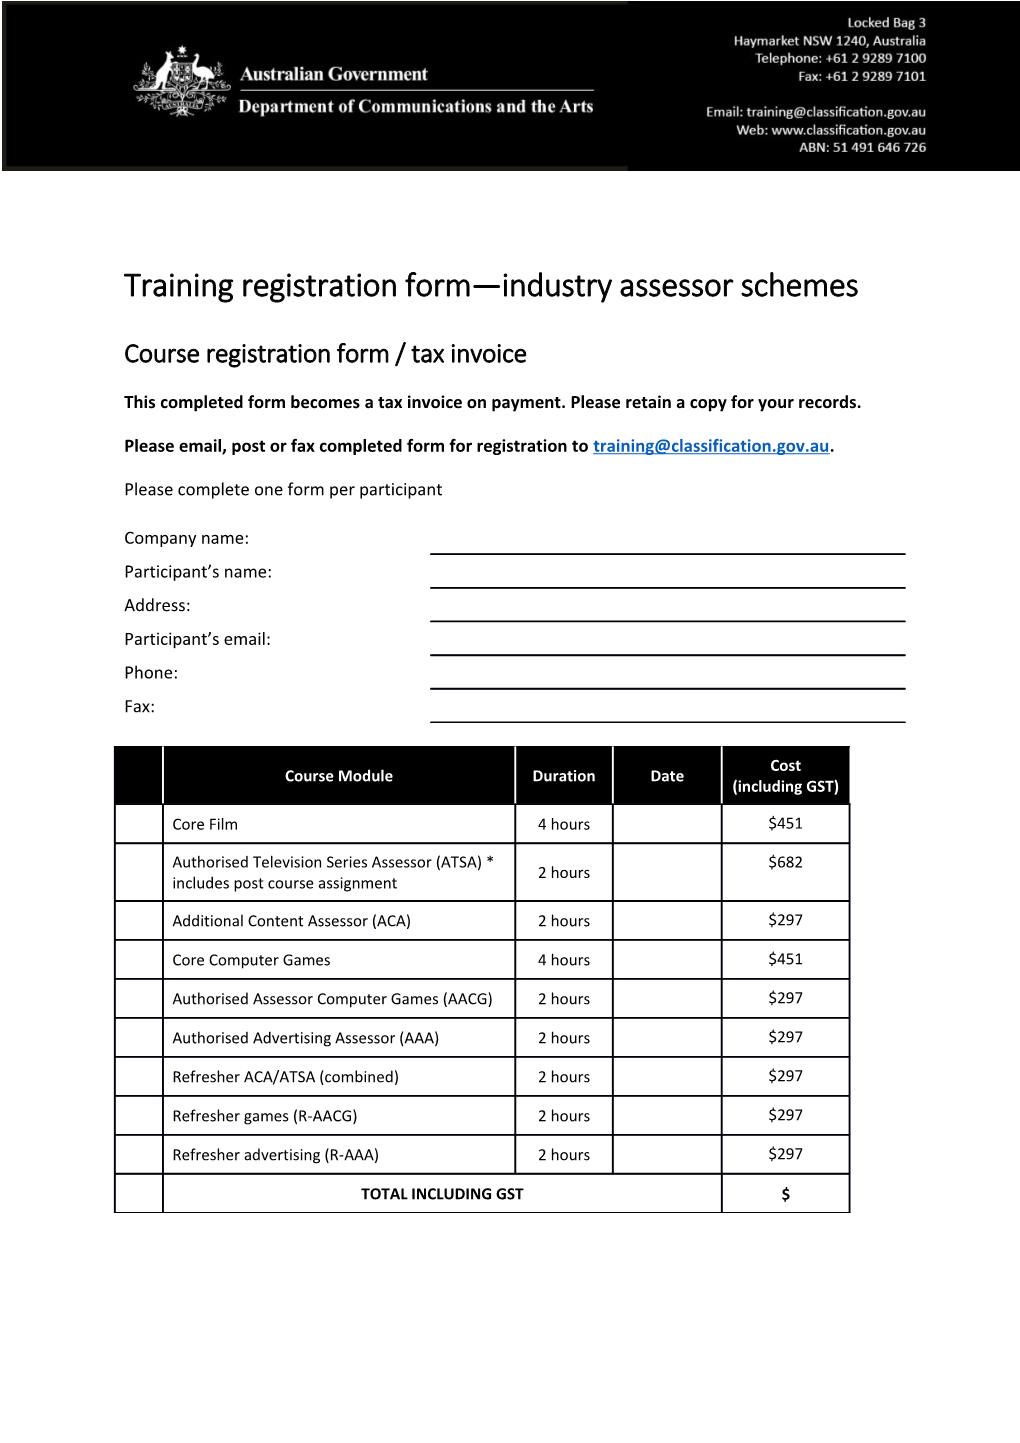 Training Registration Form Industry Assessor Schemes